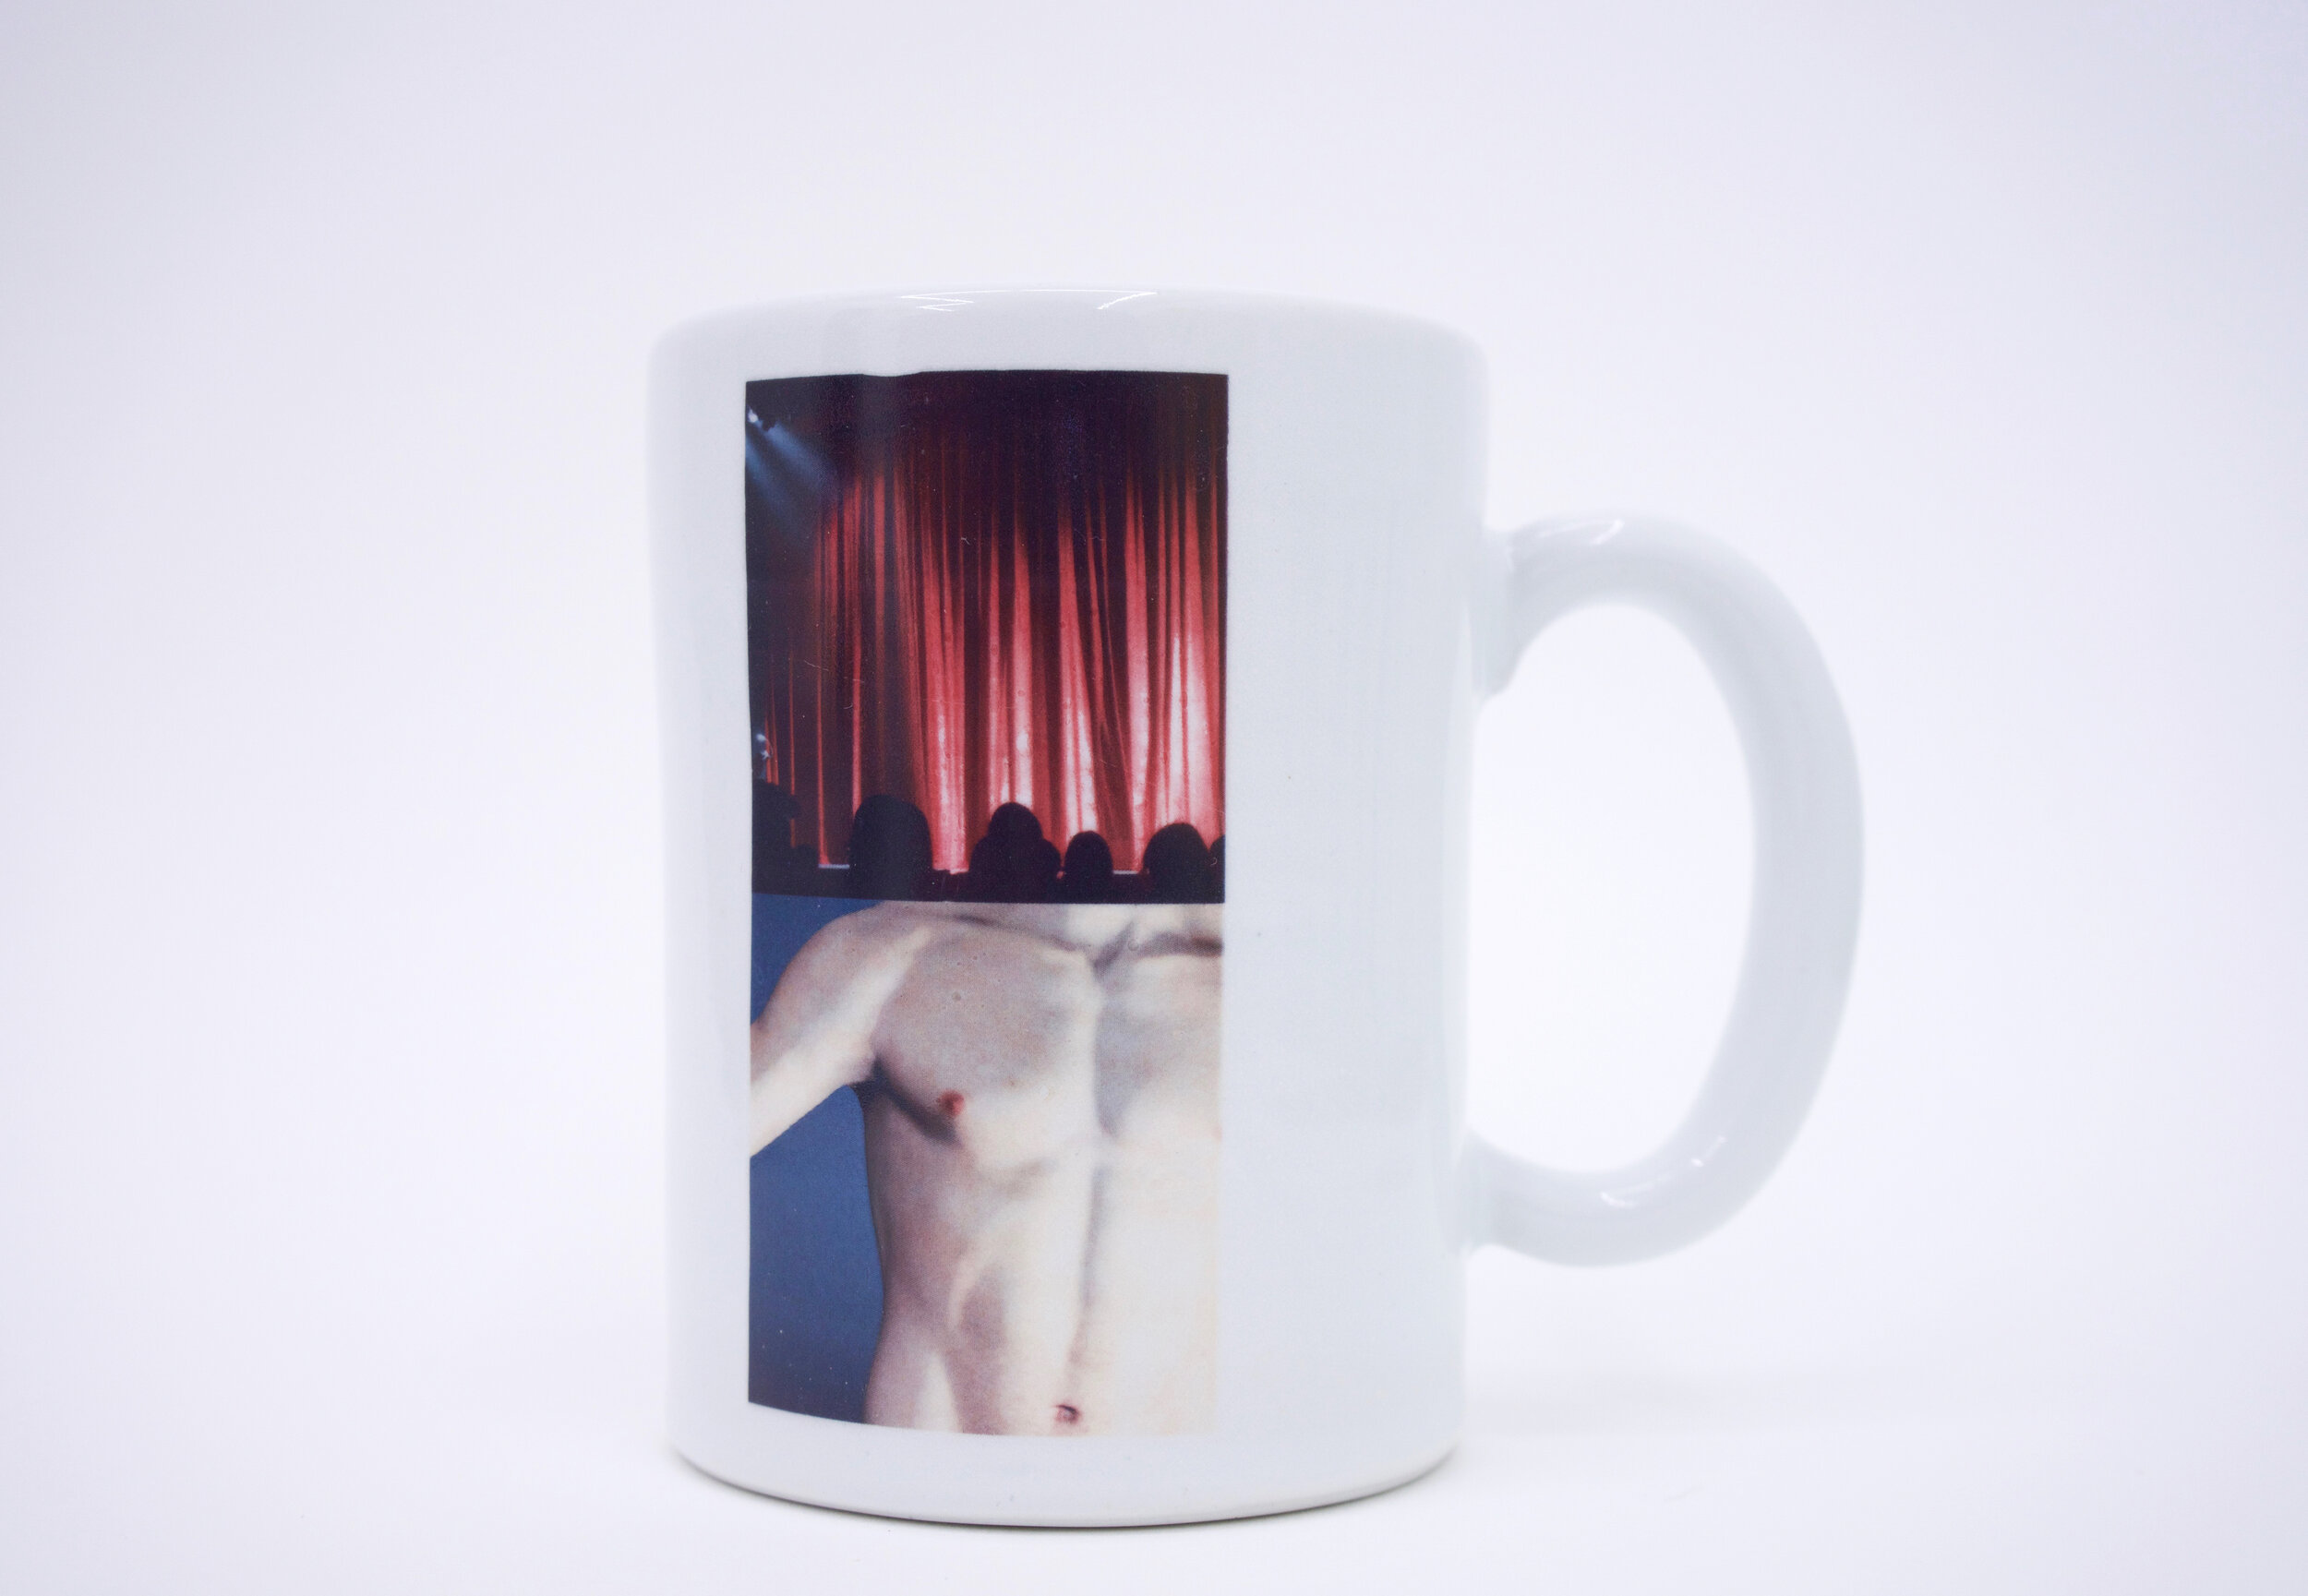  Mug 1:  ”rapid passage through varied ambiance,”  2018, porcelain, glaze, ceramic decal 